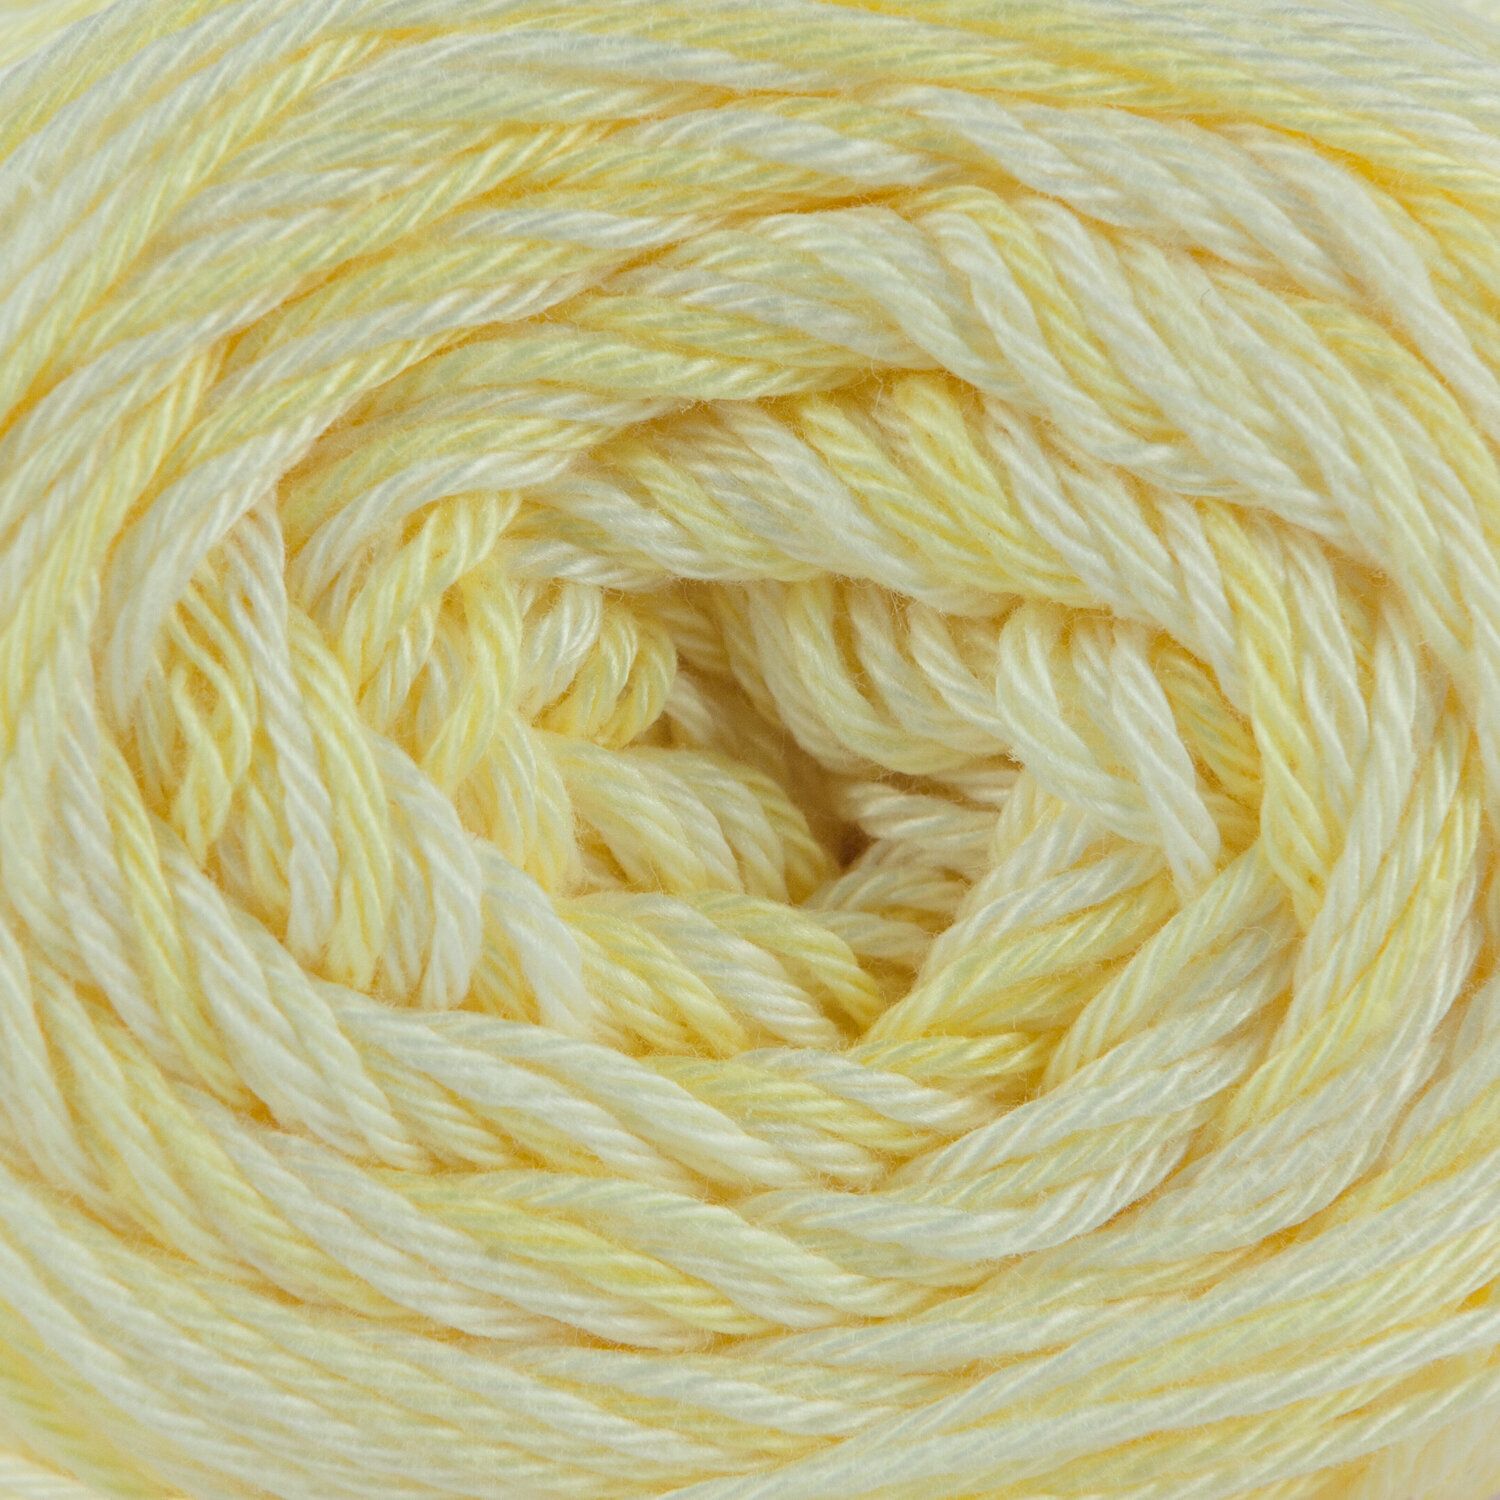 Knitting Yarn Nitarna Ceska Trebova Katka Ombre 11032 Yellow